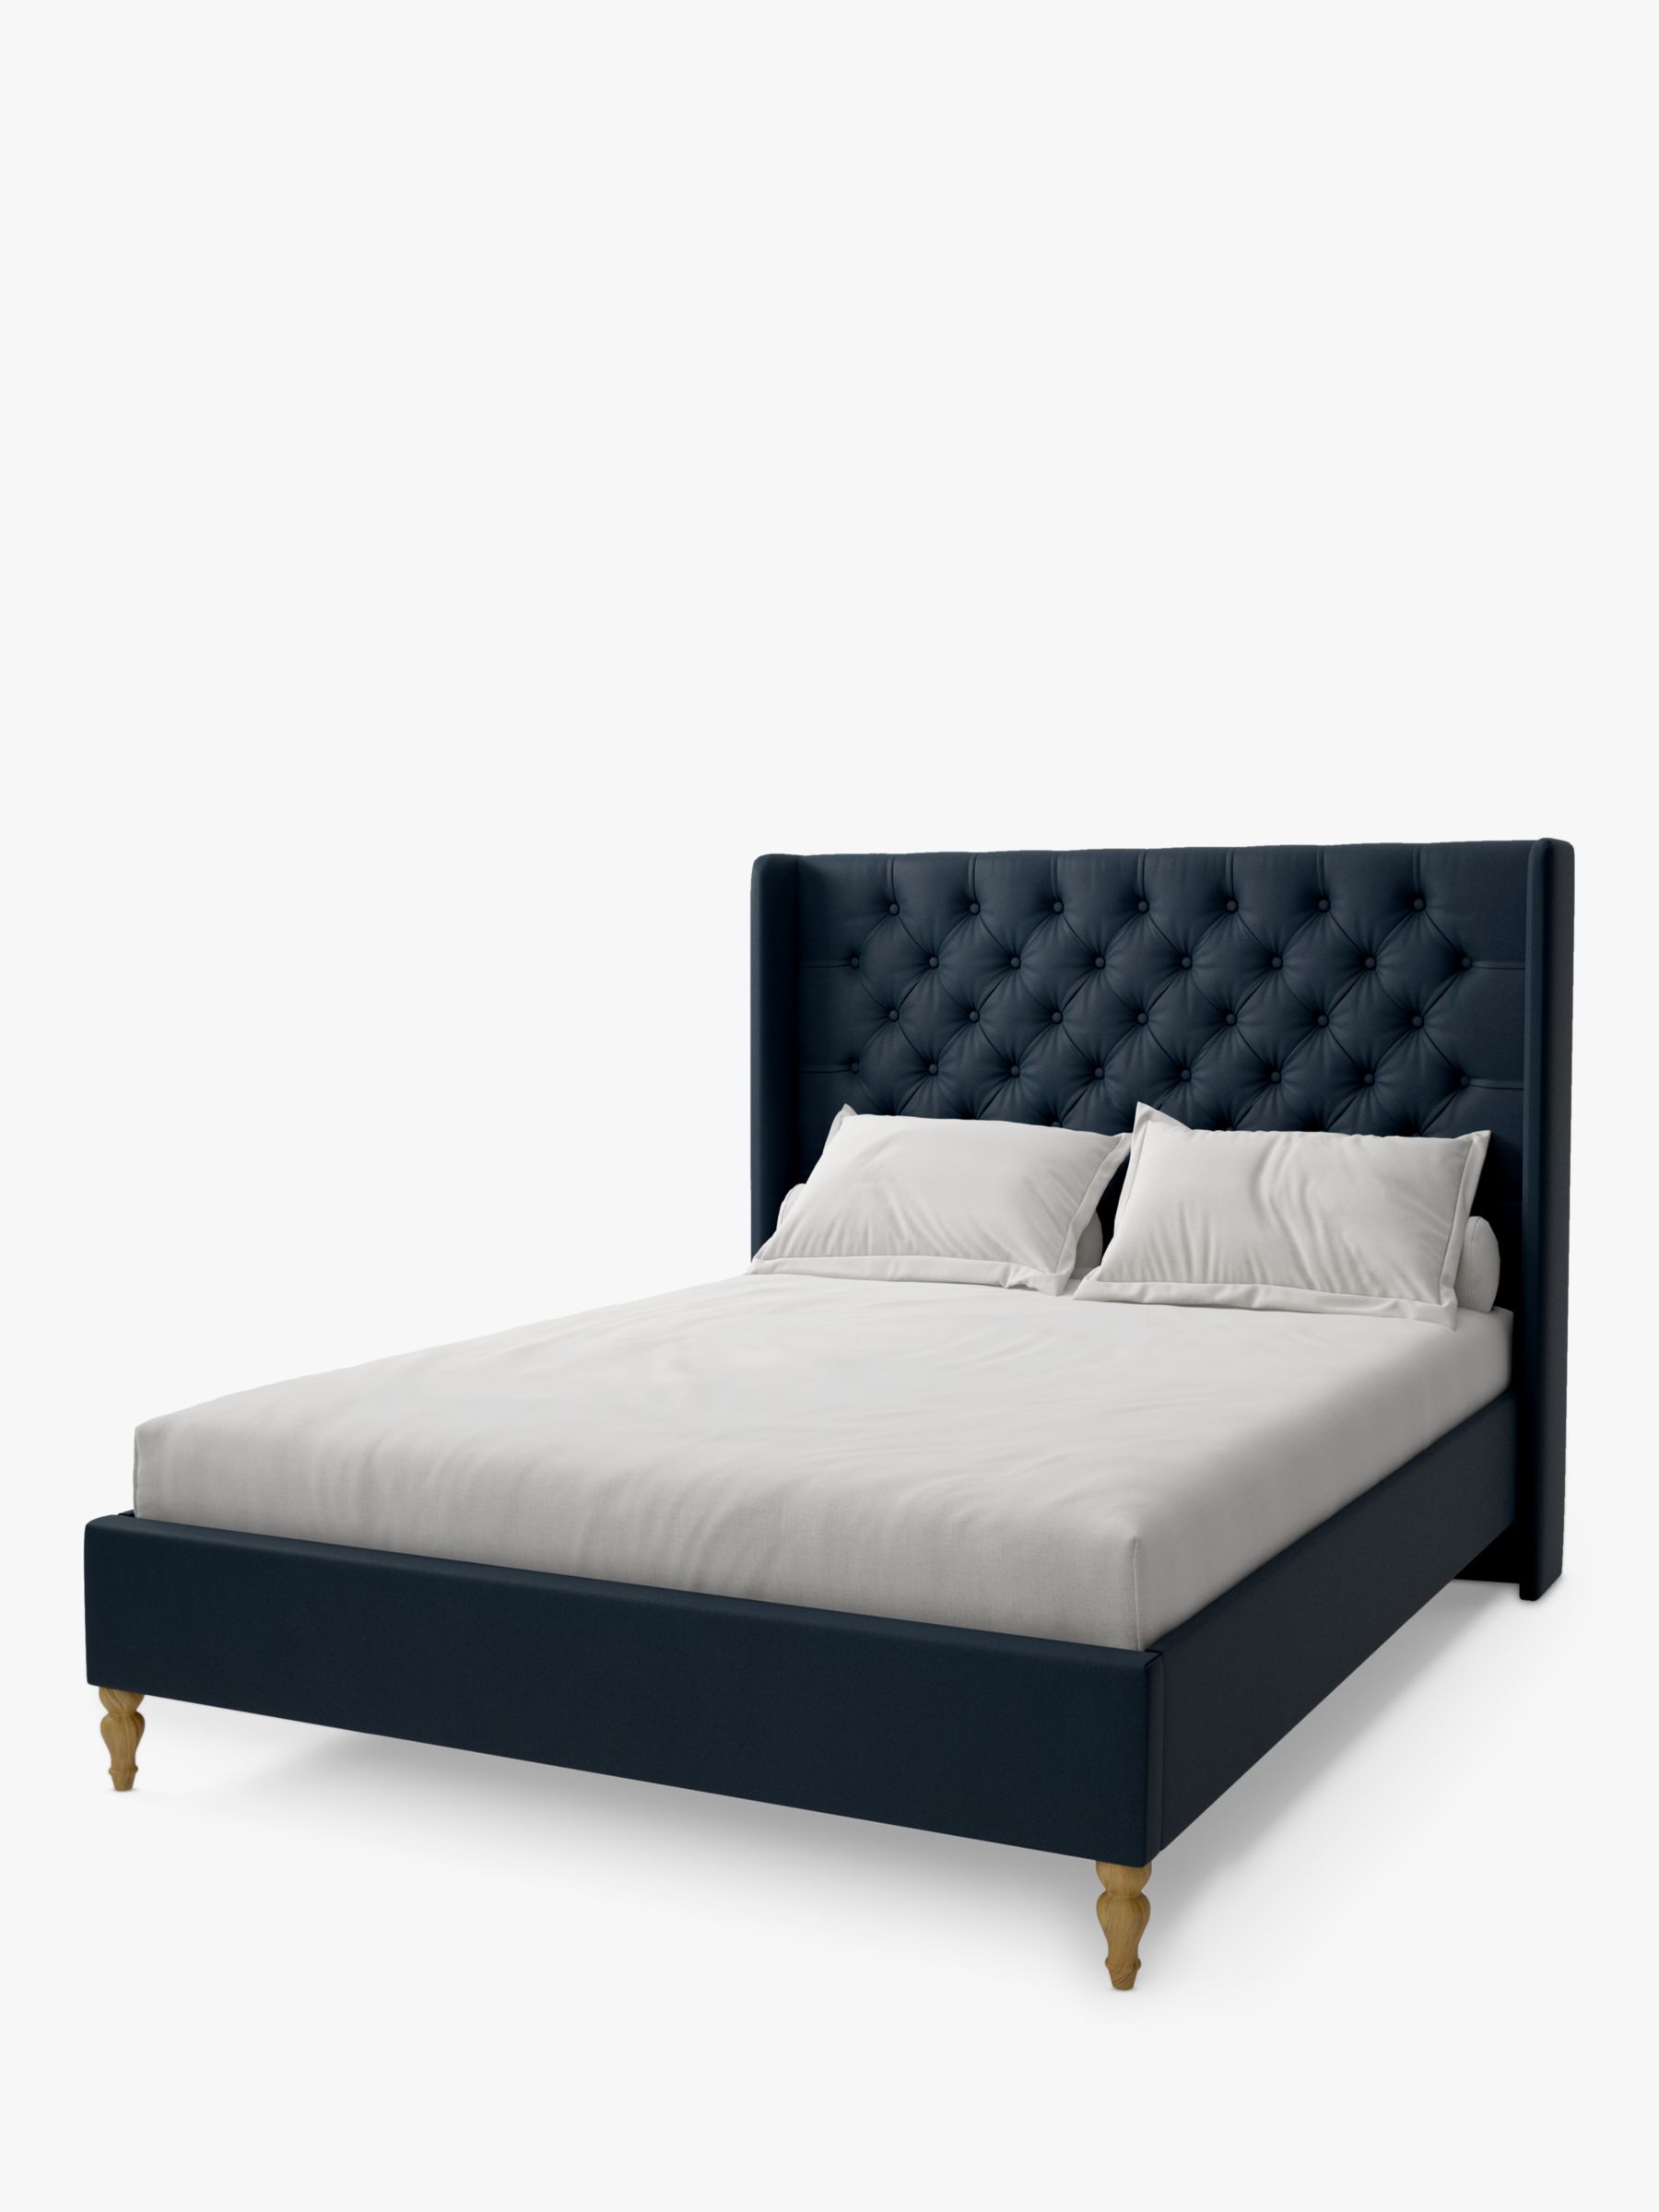 Photo of Koti home astley upholstered bed frame king size